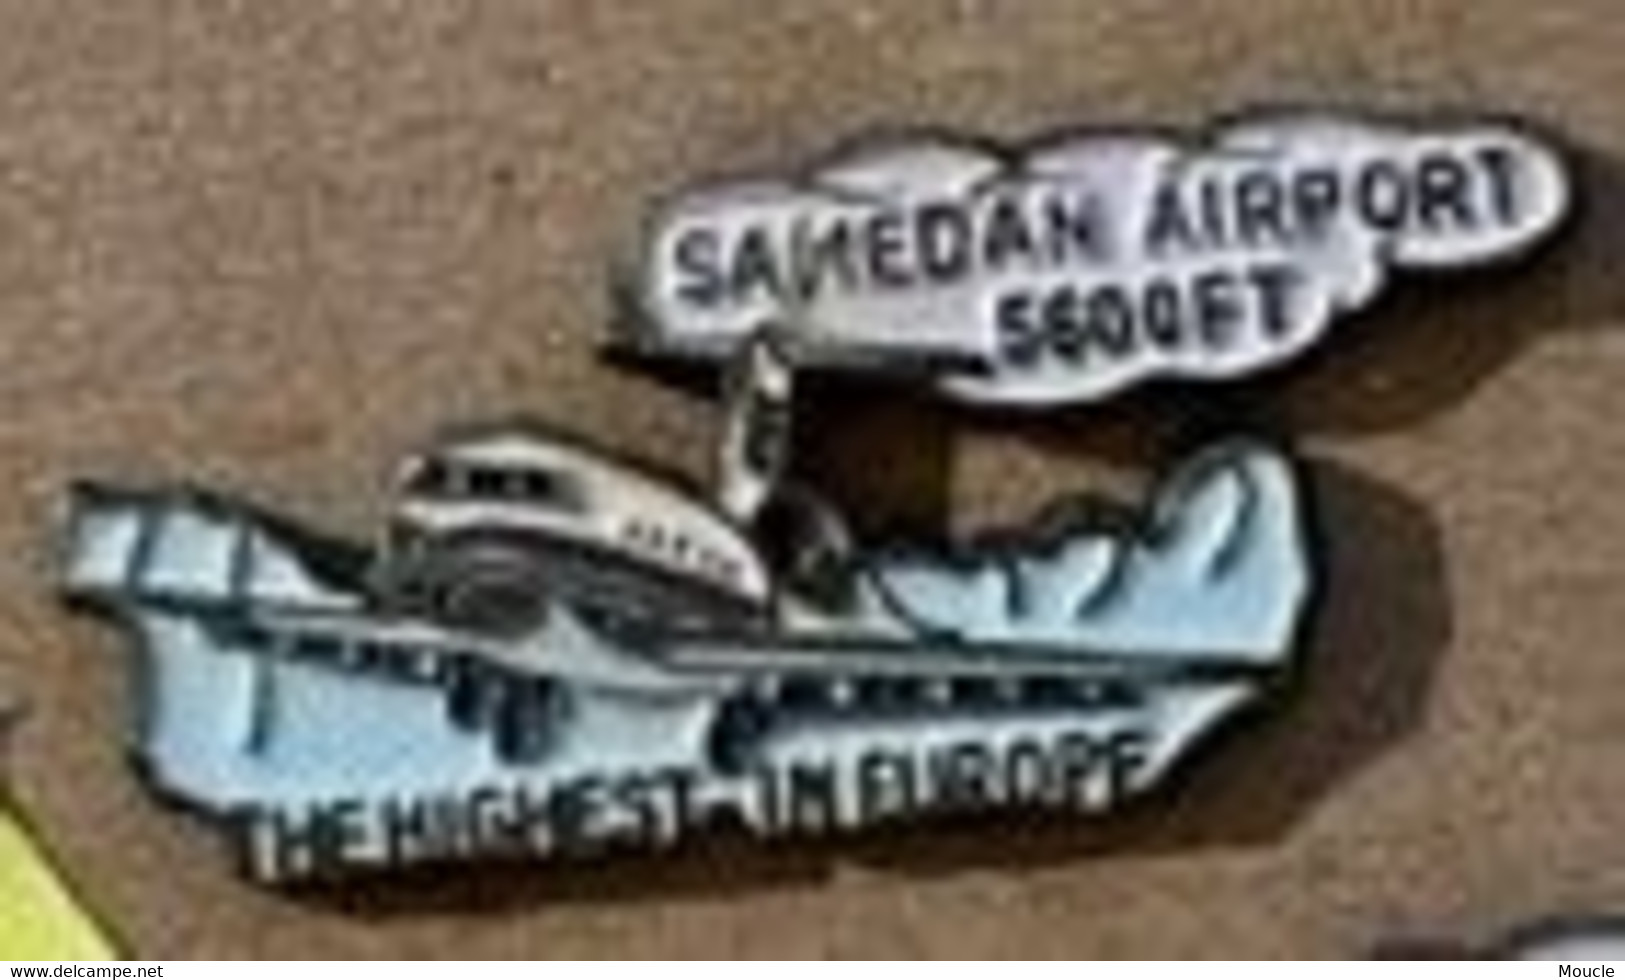 SAMEDAN AIRPORT 5600ft - THE HIGHEST IN EUROPE - PLANE - AVION - FOND BLANC - FLUGZEUG - AEREO-     (24) - Luftfahrt